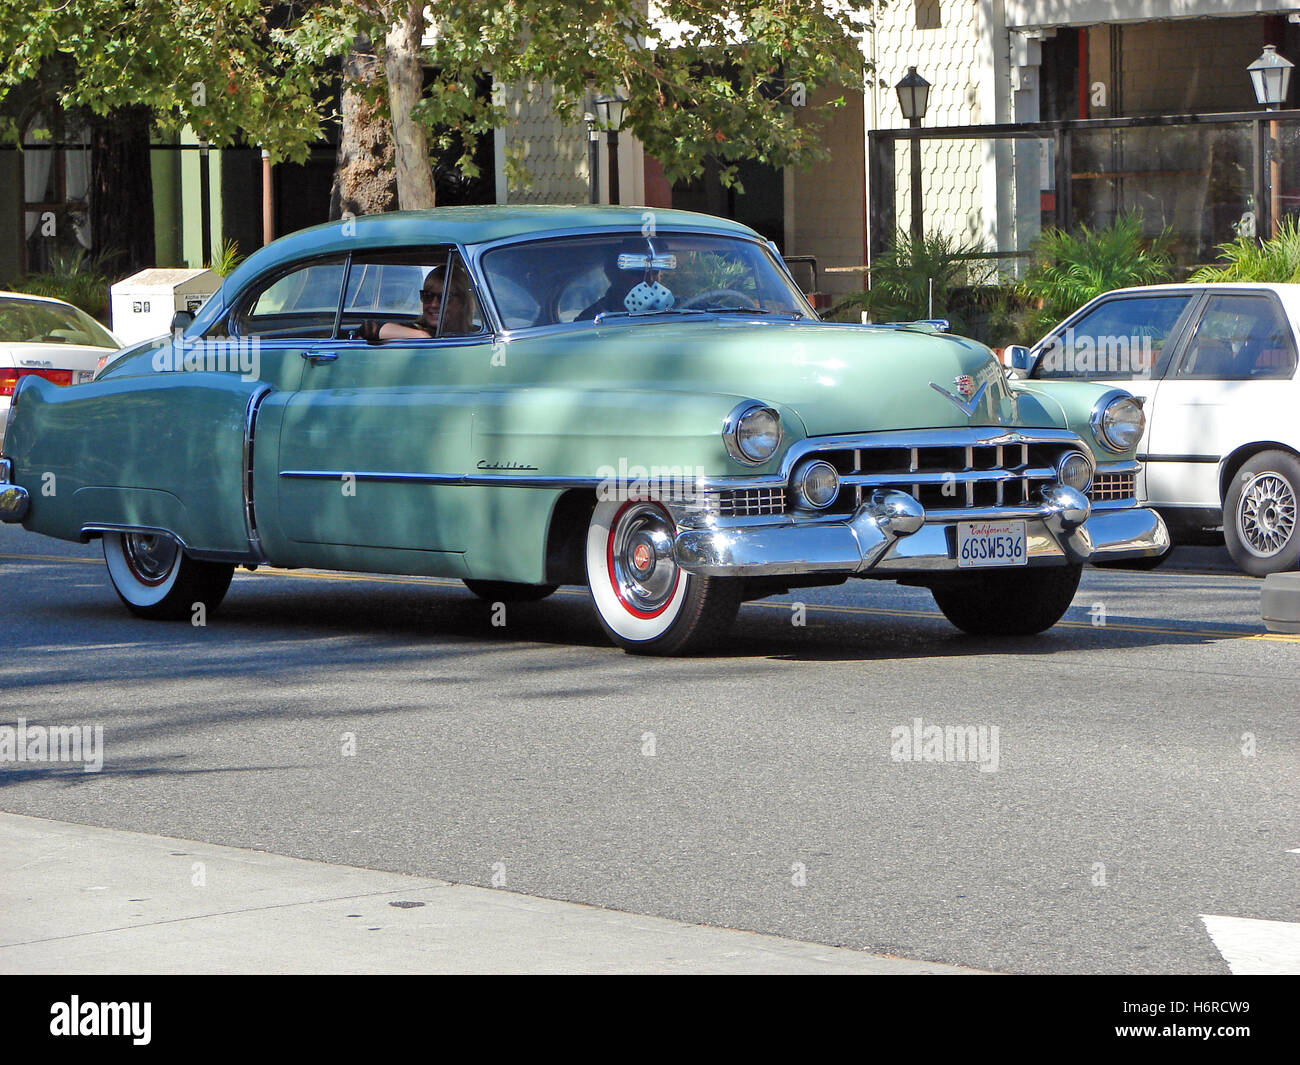 Classic 1952 Cadillac Stock Photo